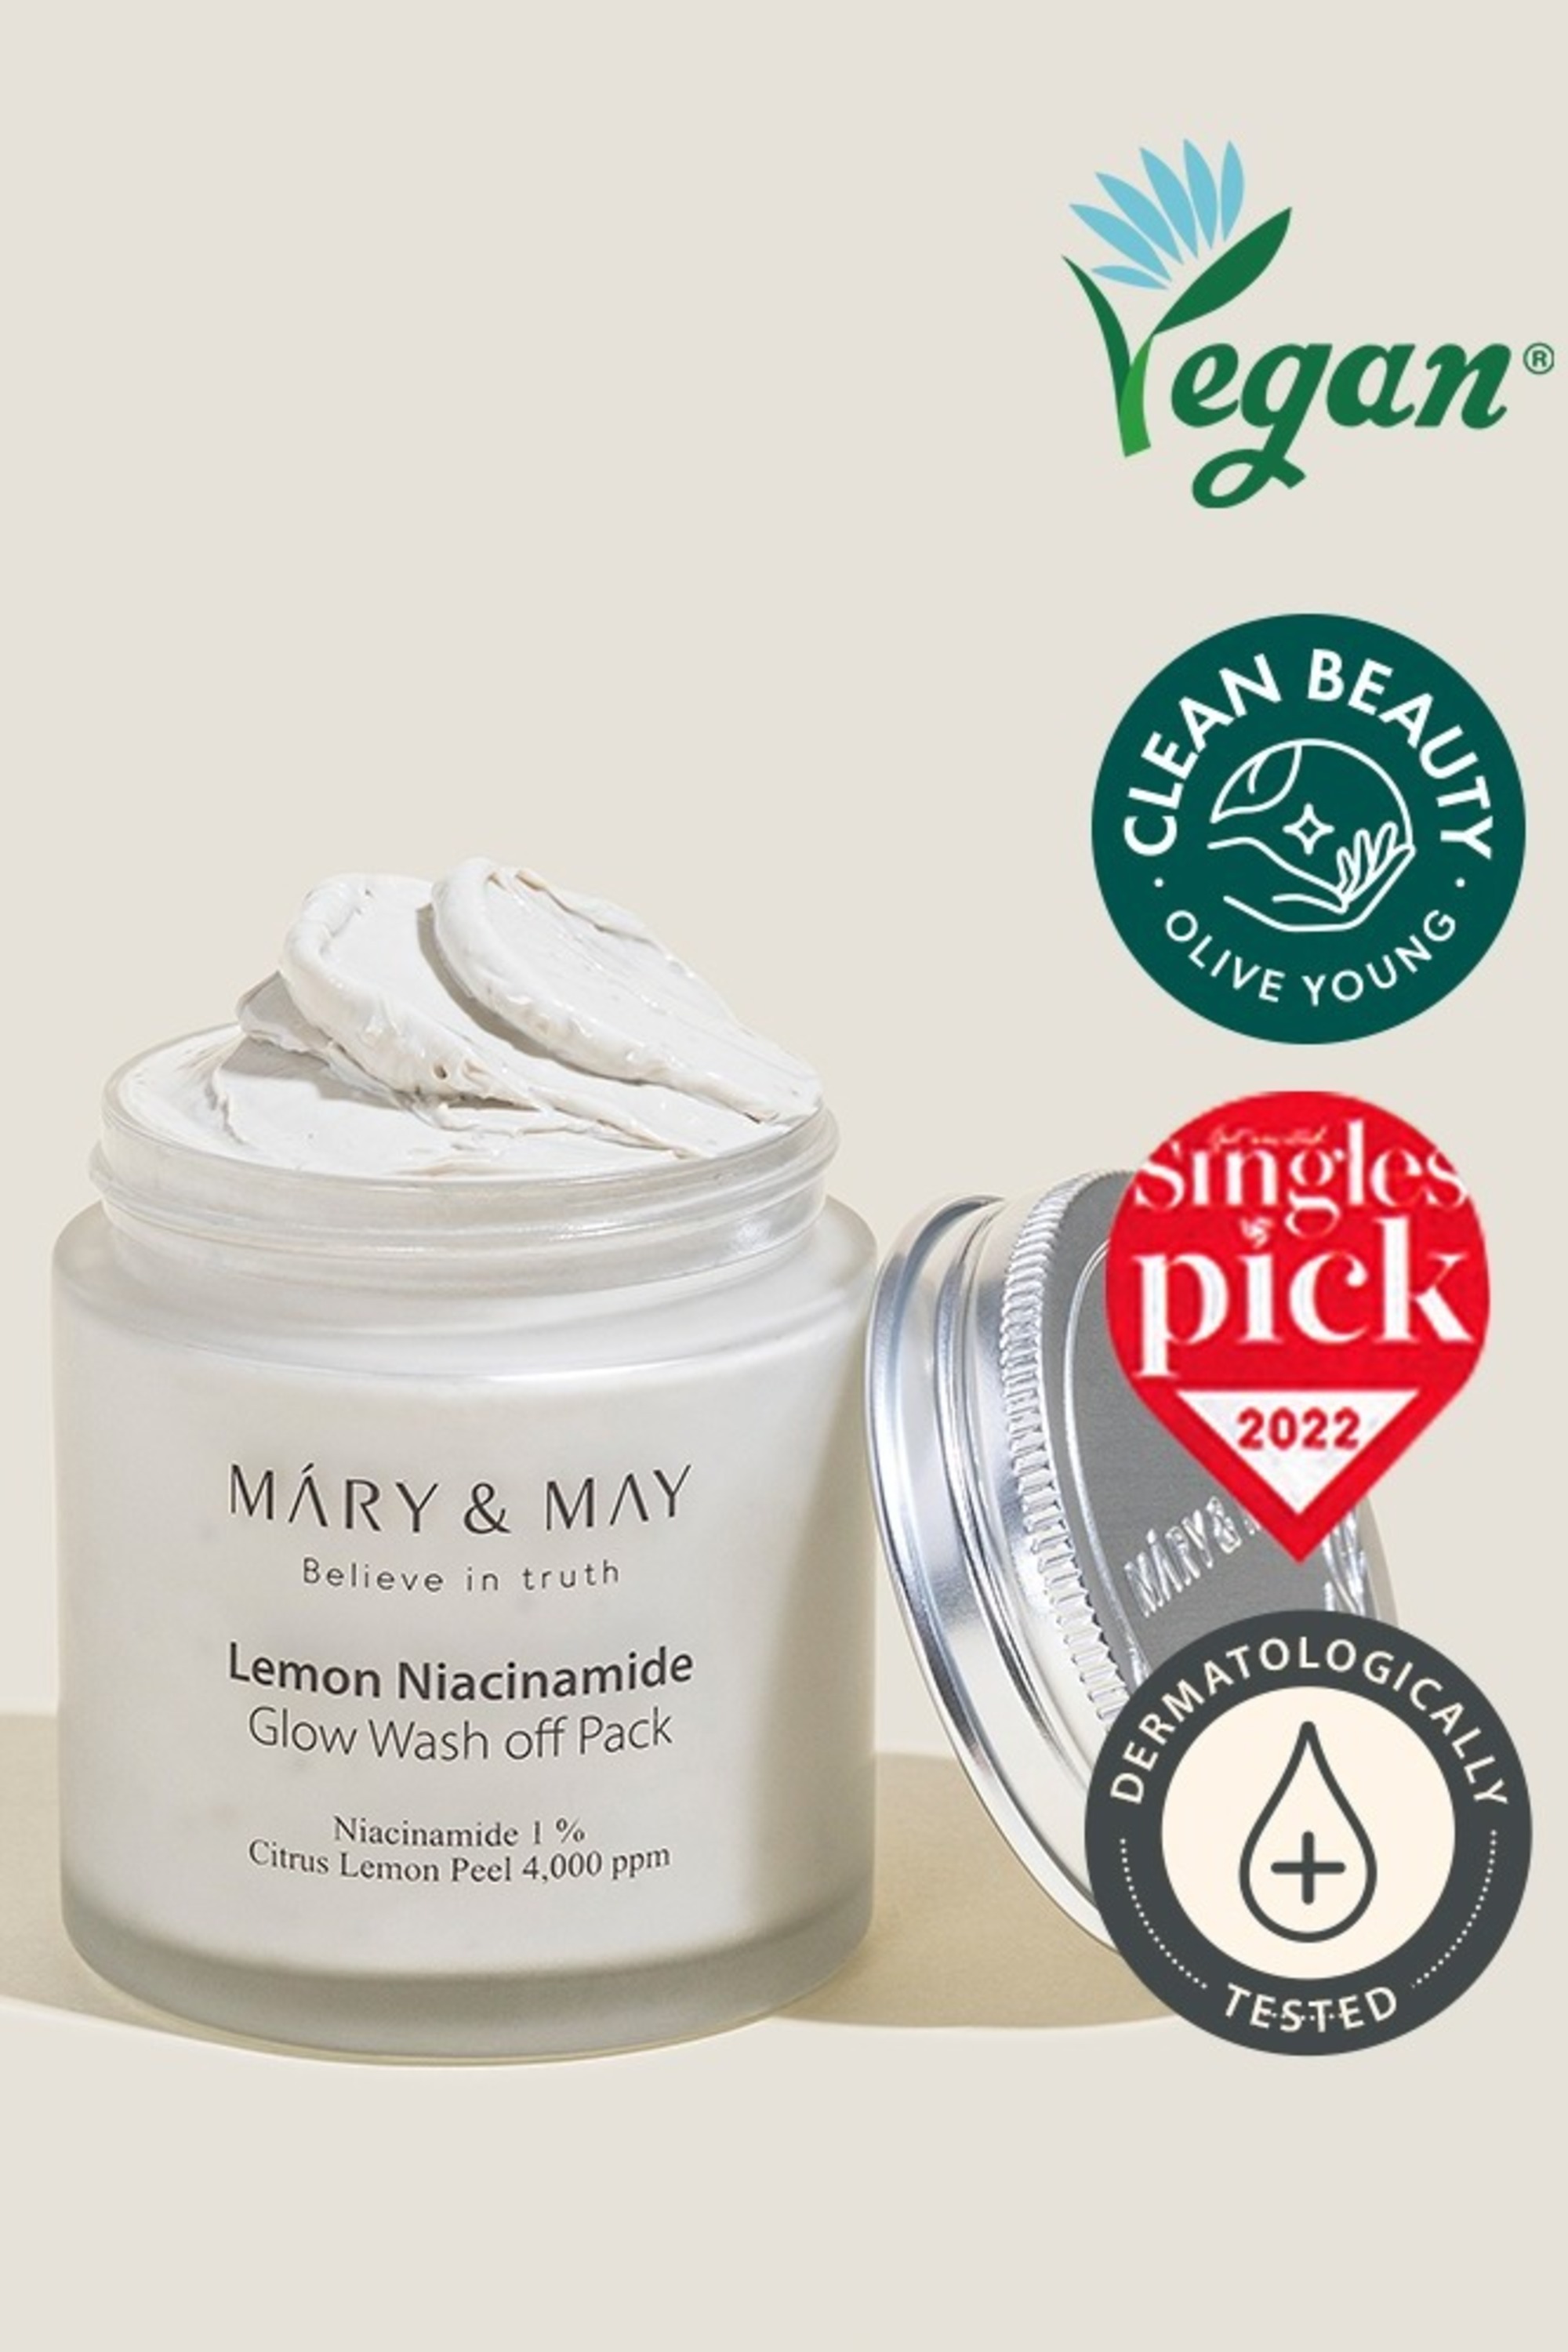  Mary&May Lemon Niacinamide Glow Wash Off Pack 125g 